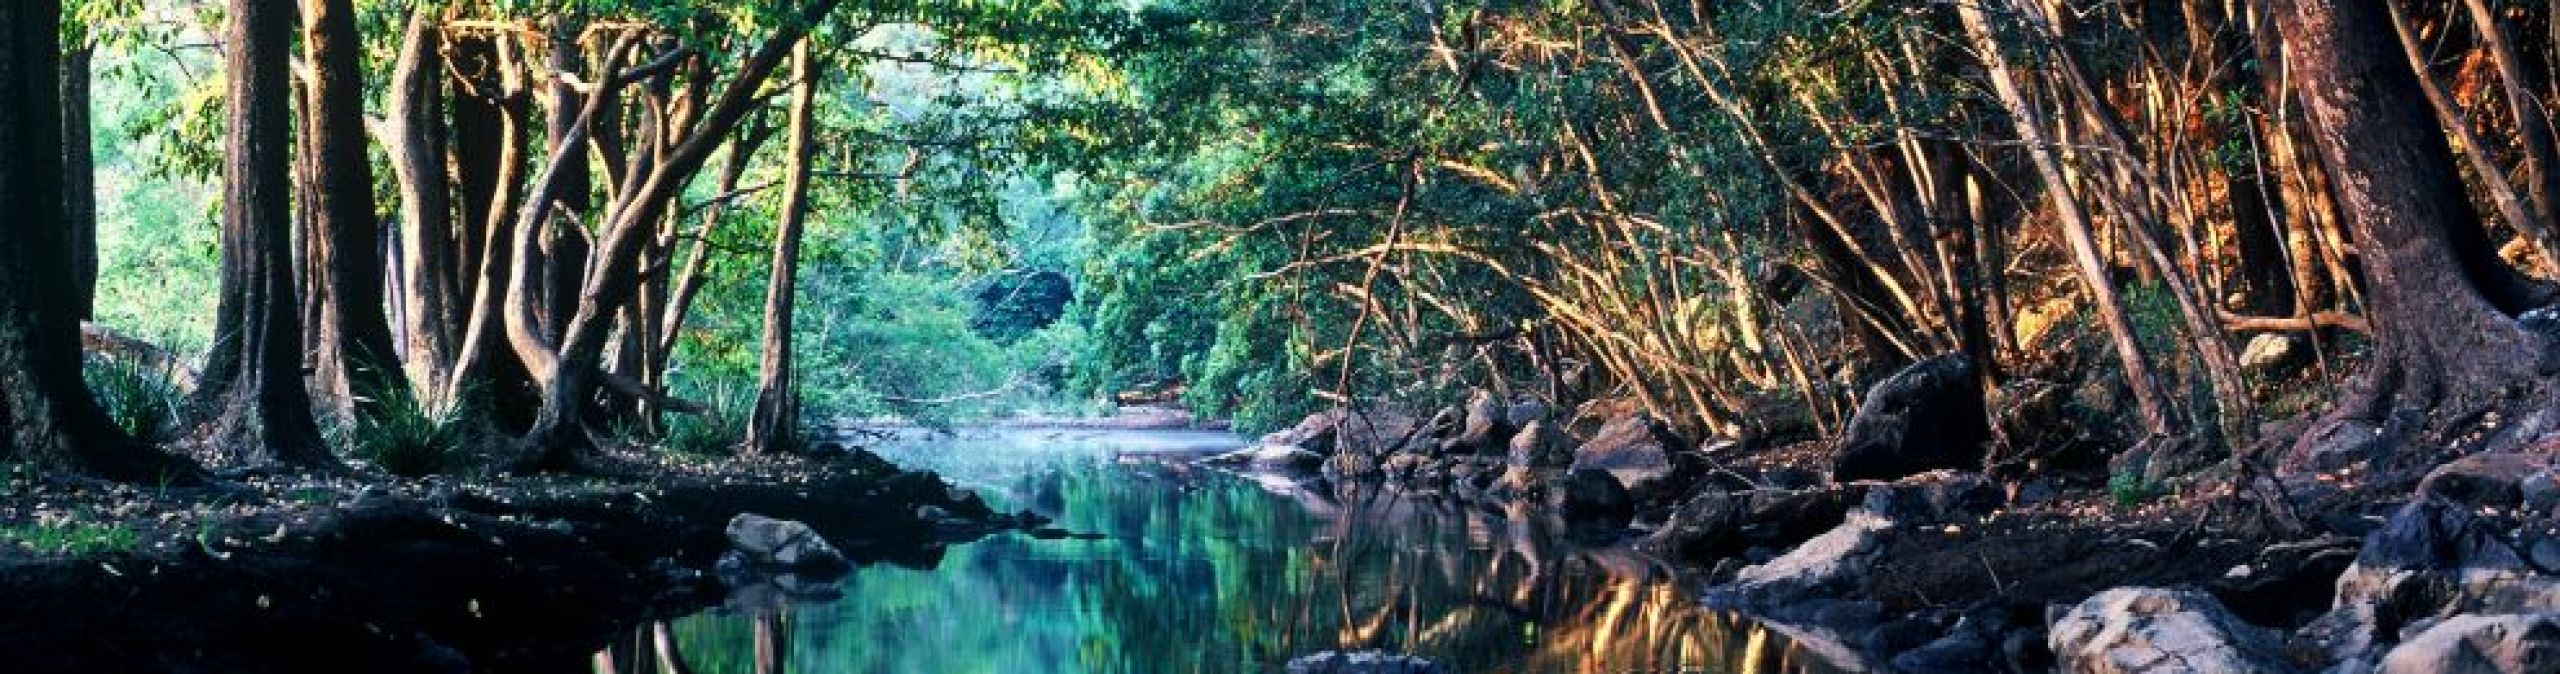 Rainforest Creek - Barron River
Photographer: Kerry Trapnell